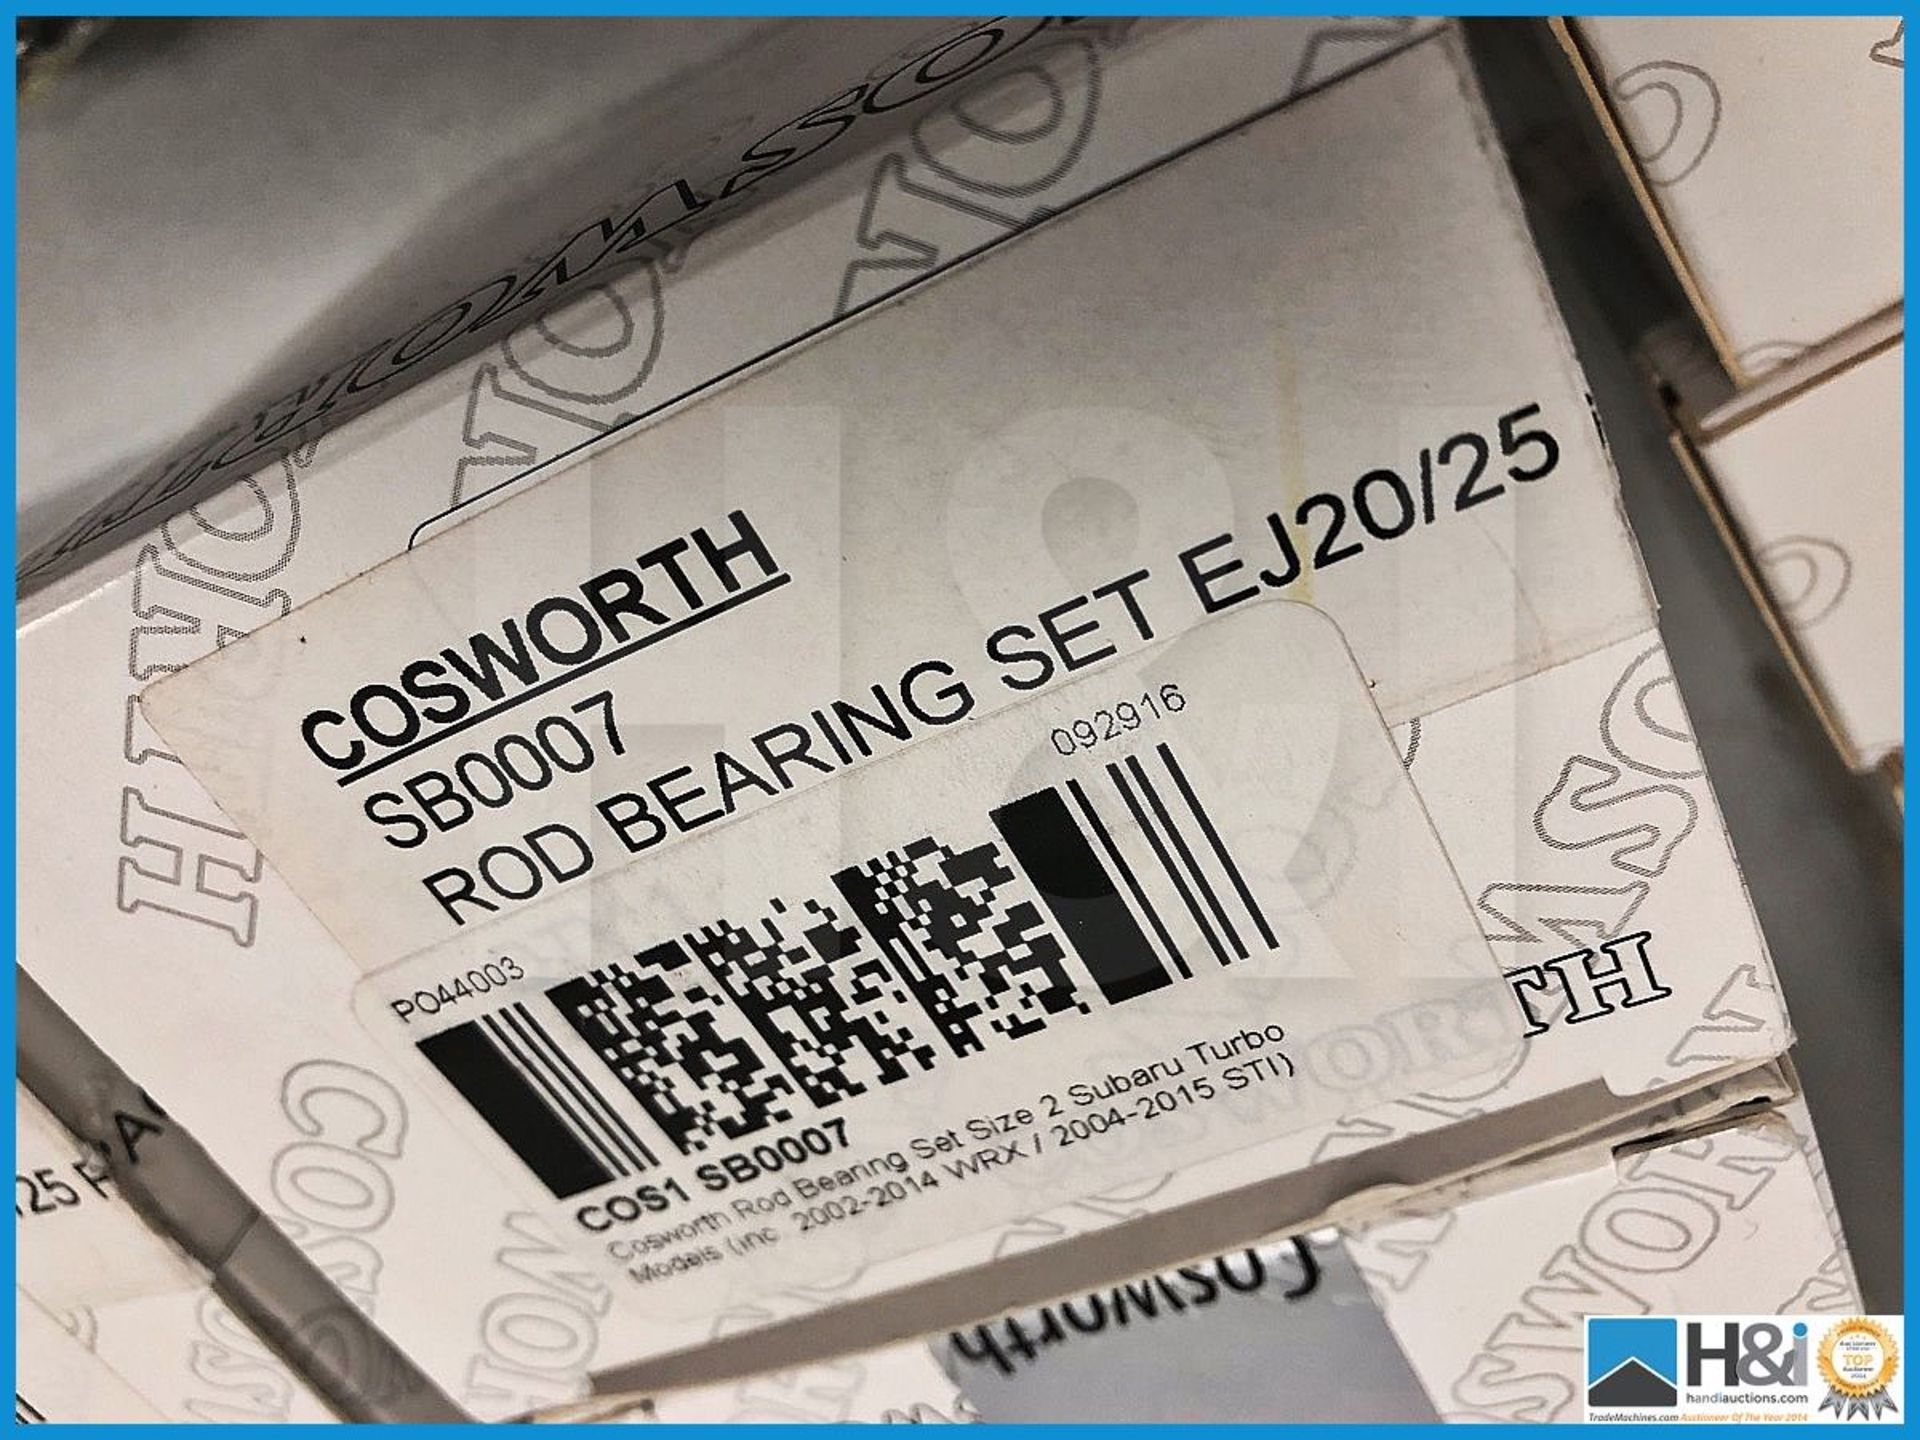 19 x Cosworth rod bearing sets for Subaru EJ20/25 Race-2 + 20 x Cosworth rod bearing sets for EJ20/2 - Image 4 of 4